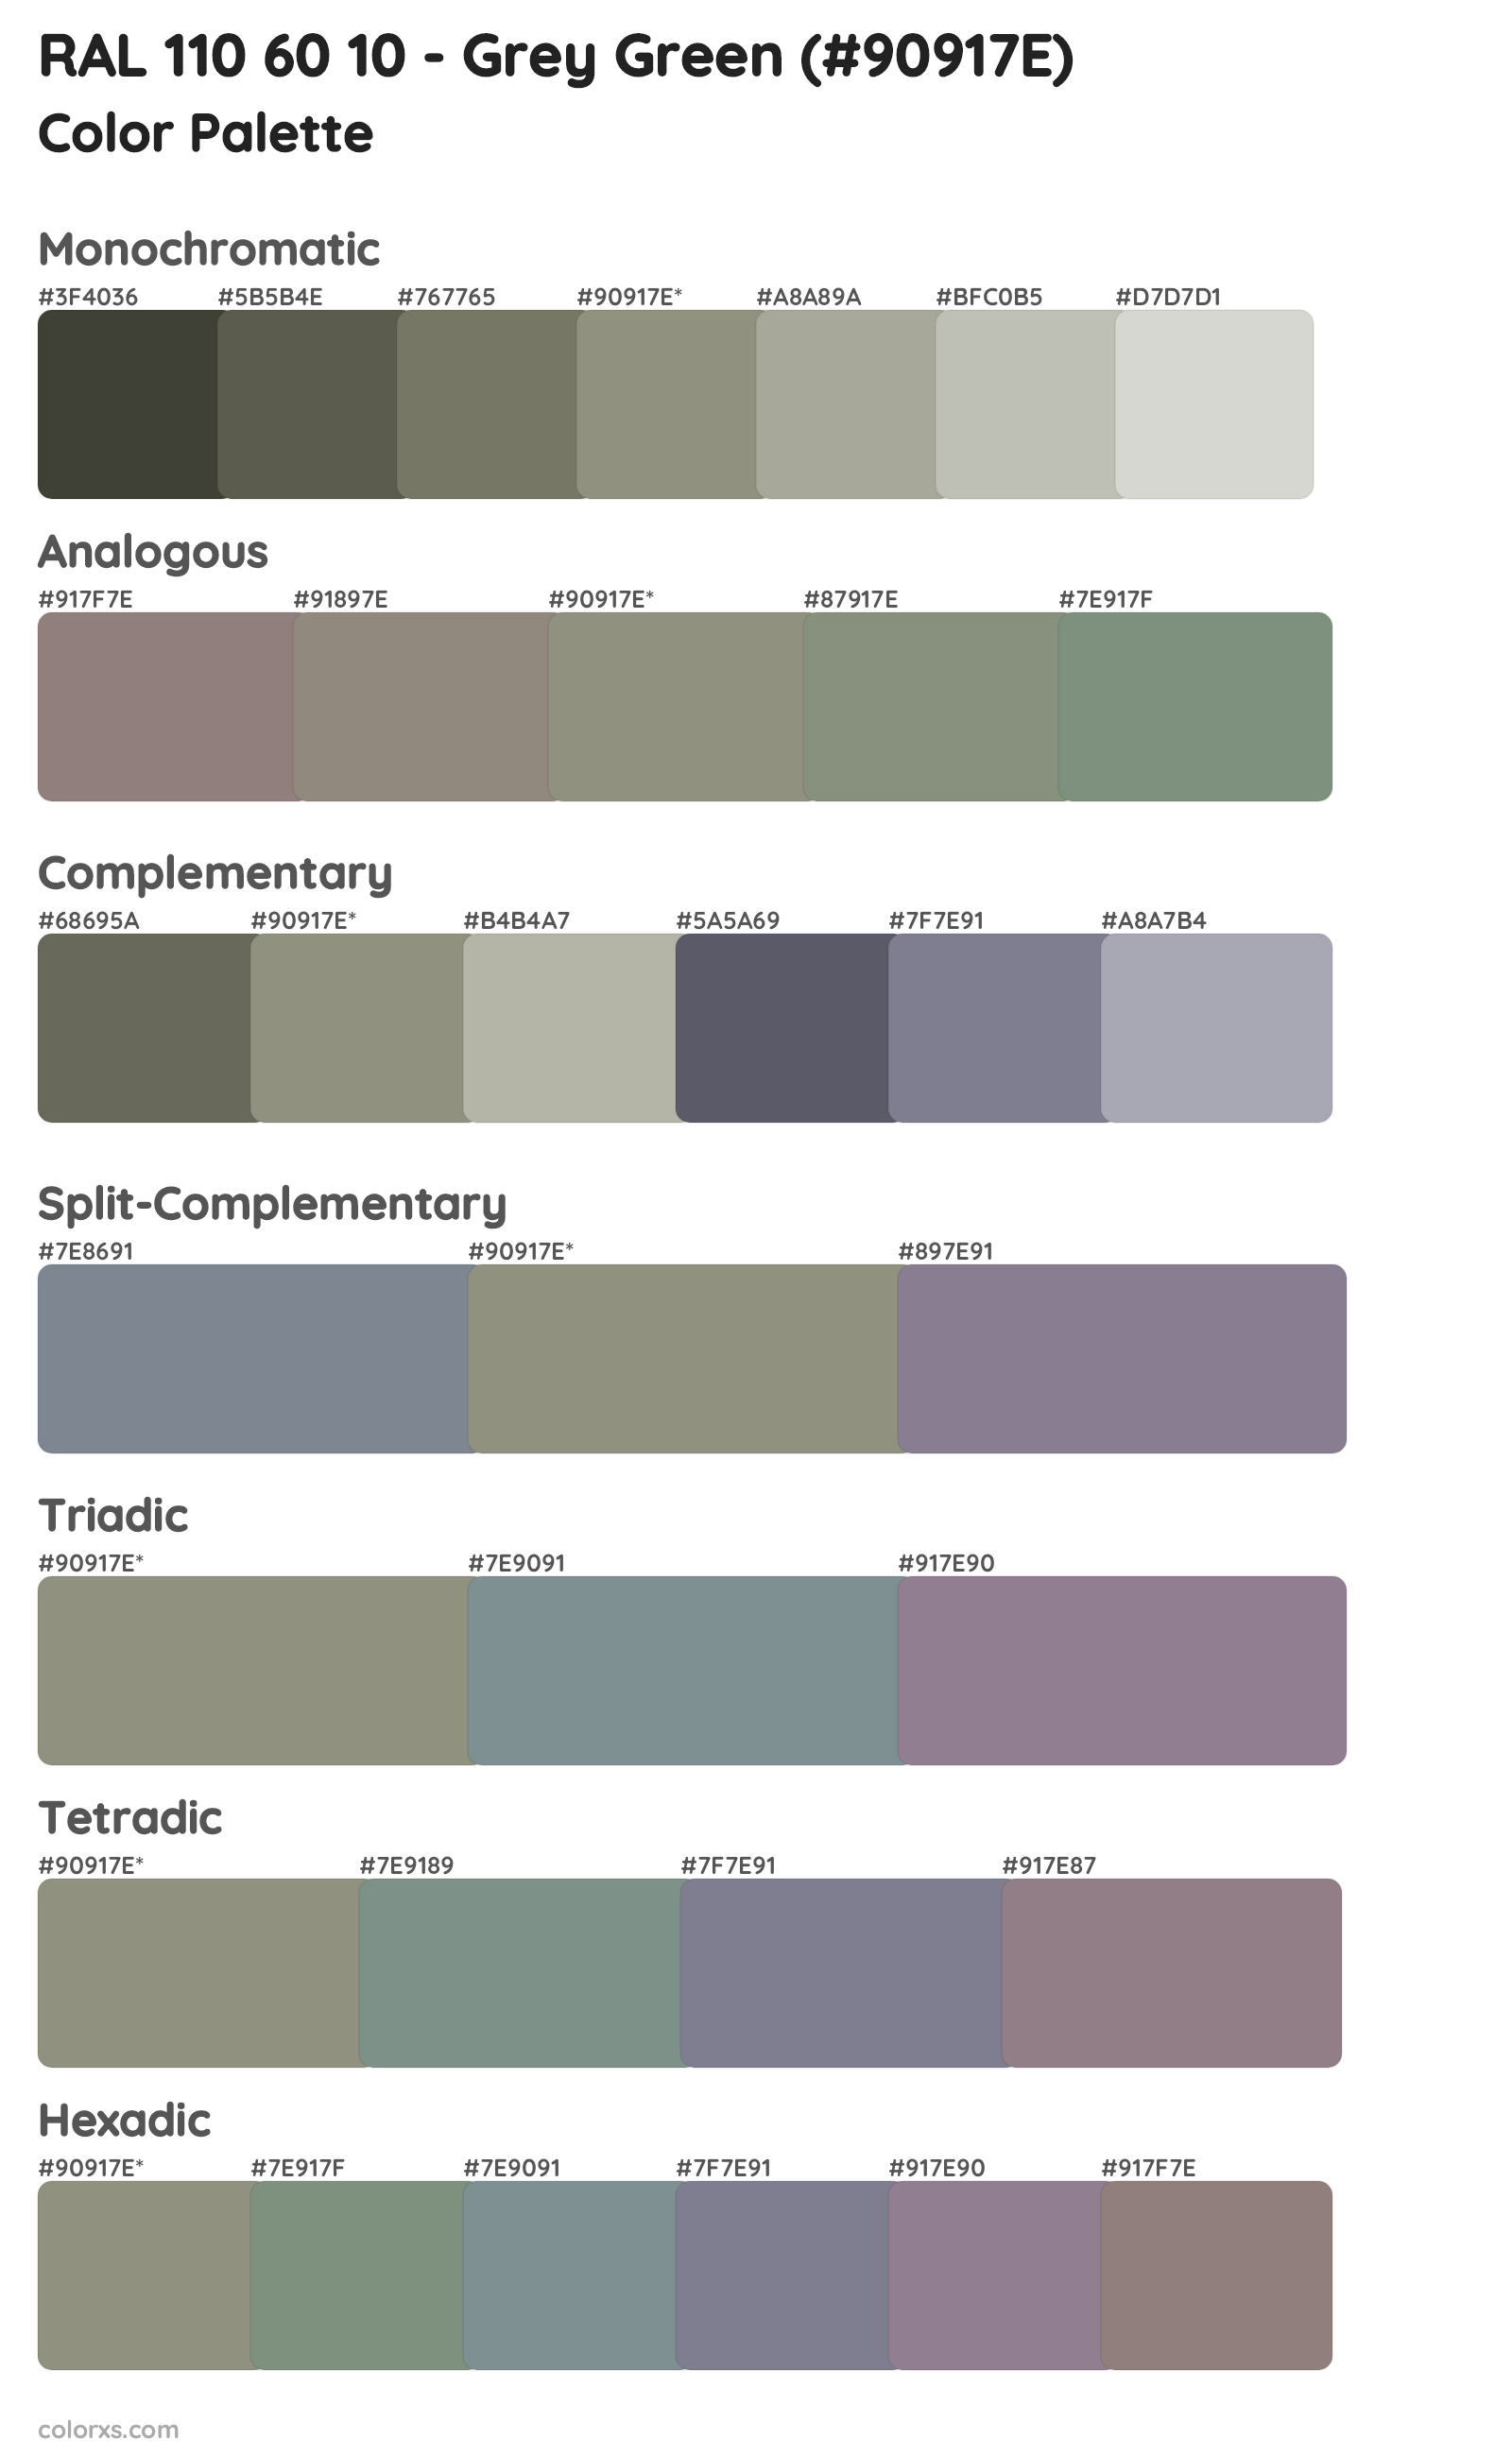 RAL 110 60 10 - Grey Green Color Scheme Palettes